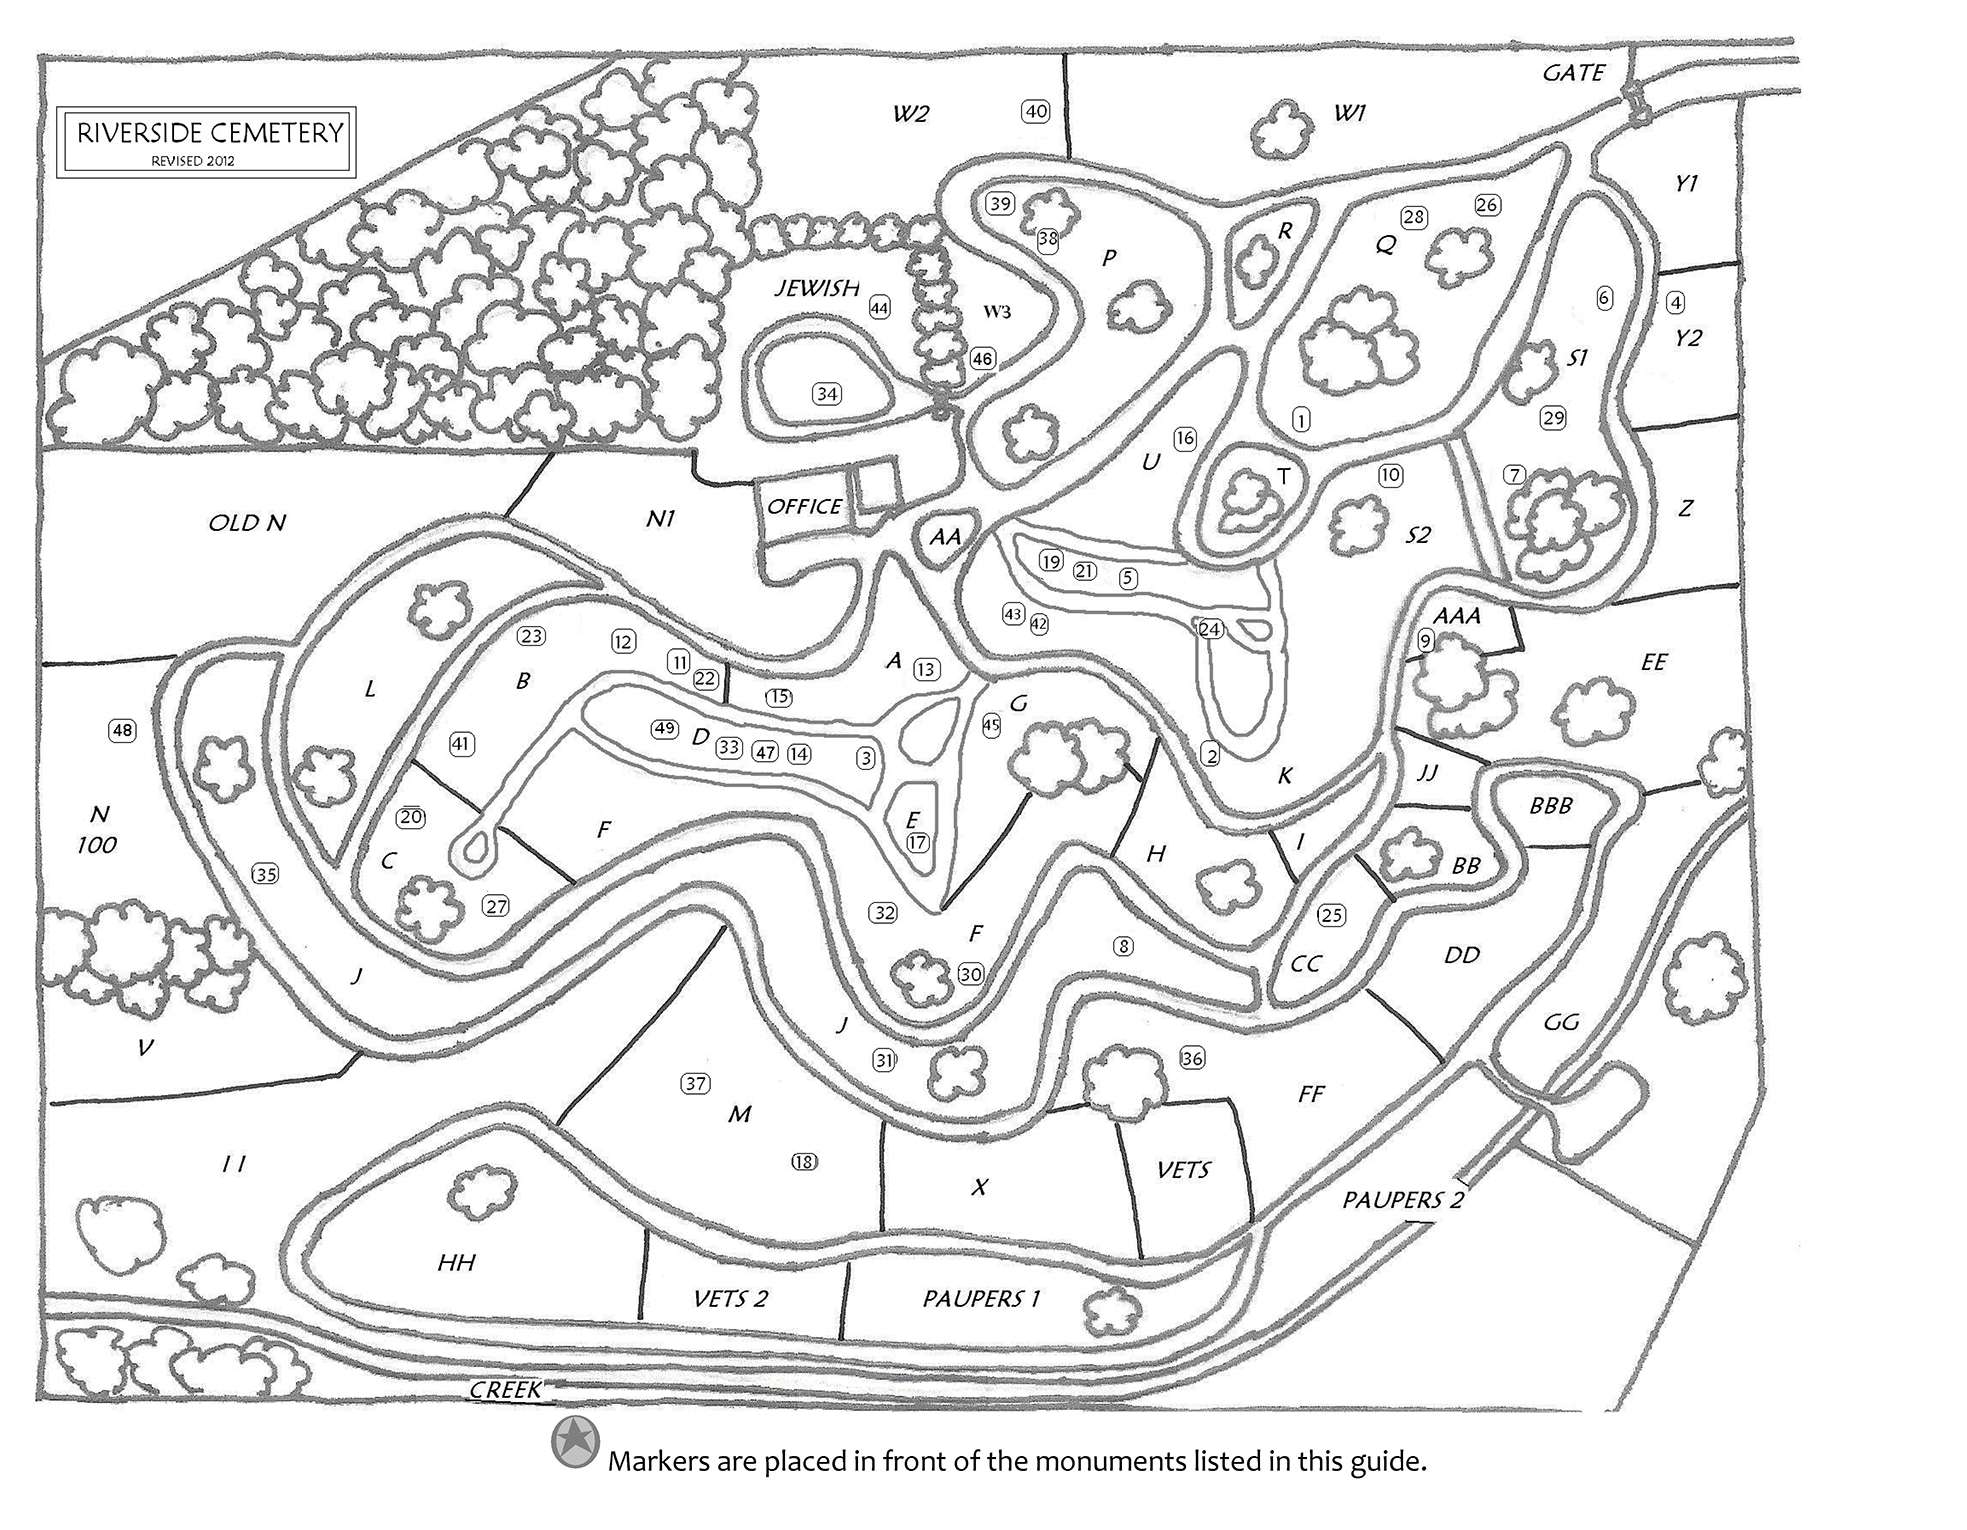 Cemetery map of Riverside Cemetery in Ashville North Carolina